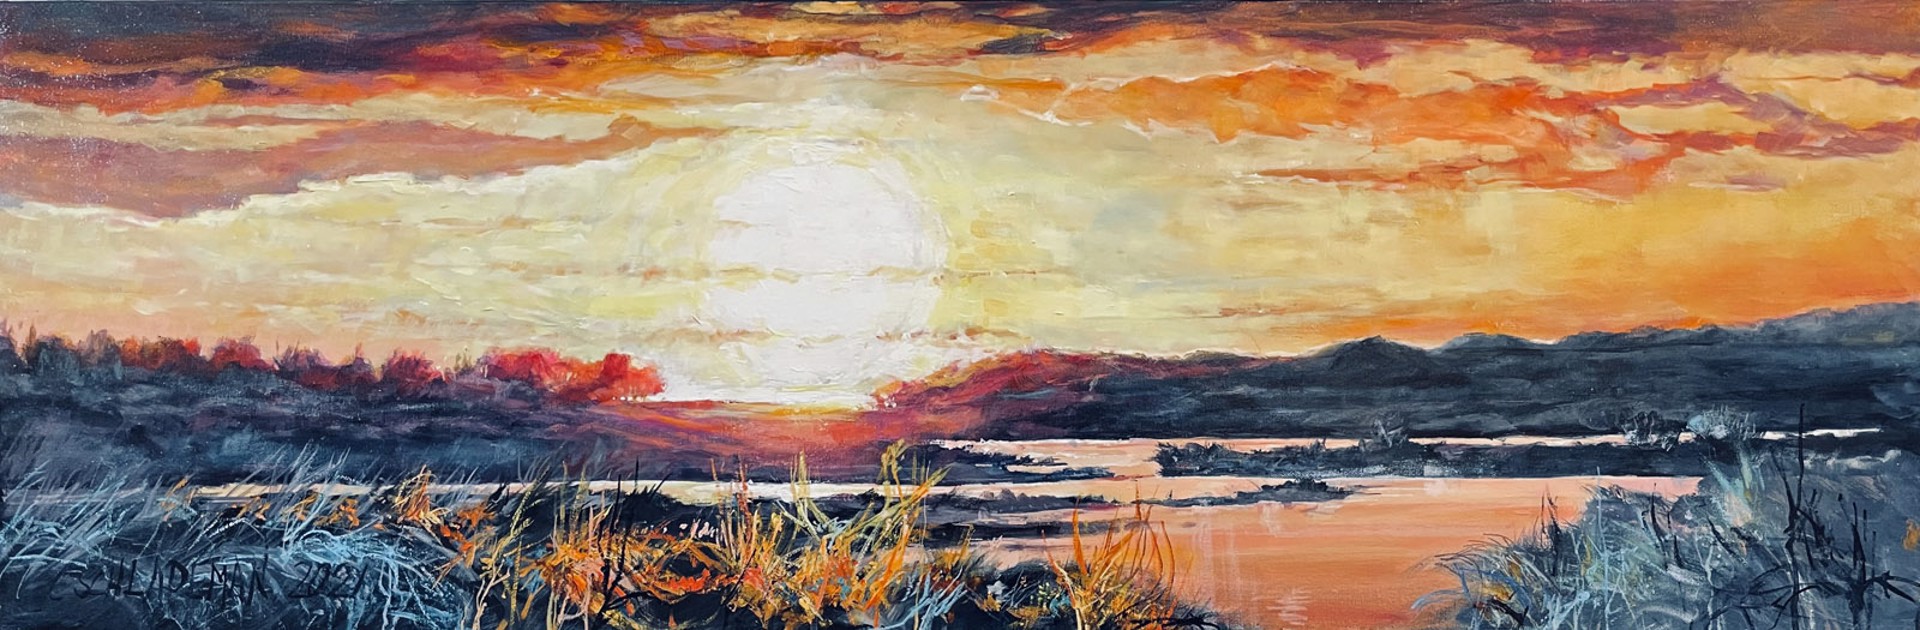 Sunrise Sunset by Carl Schlademan